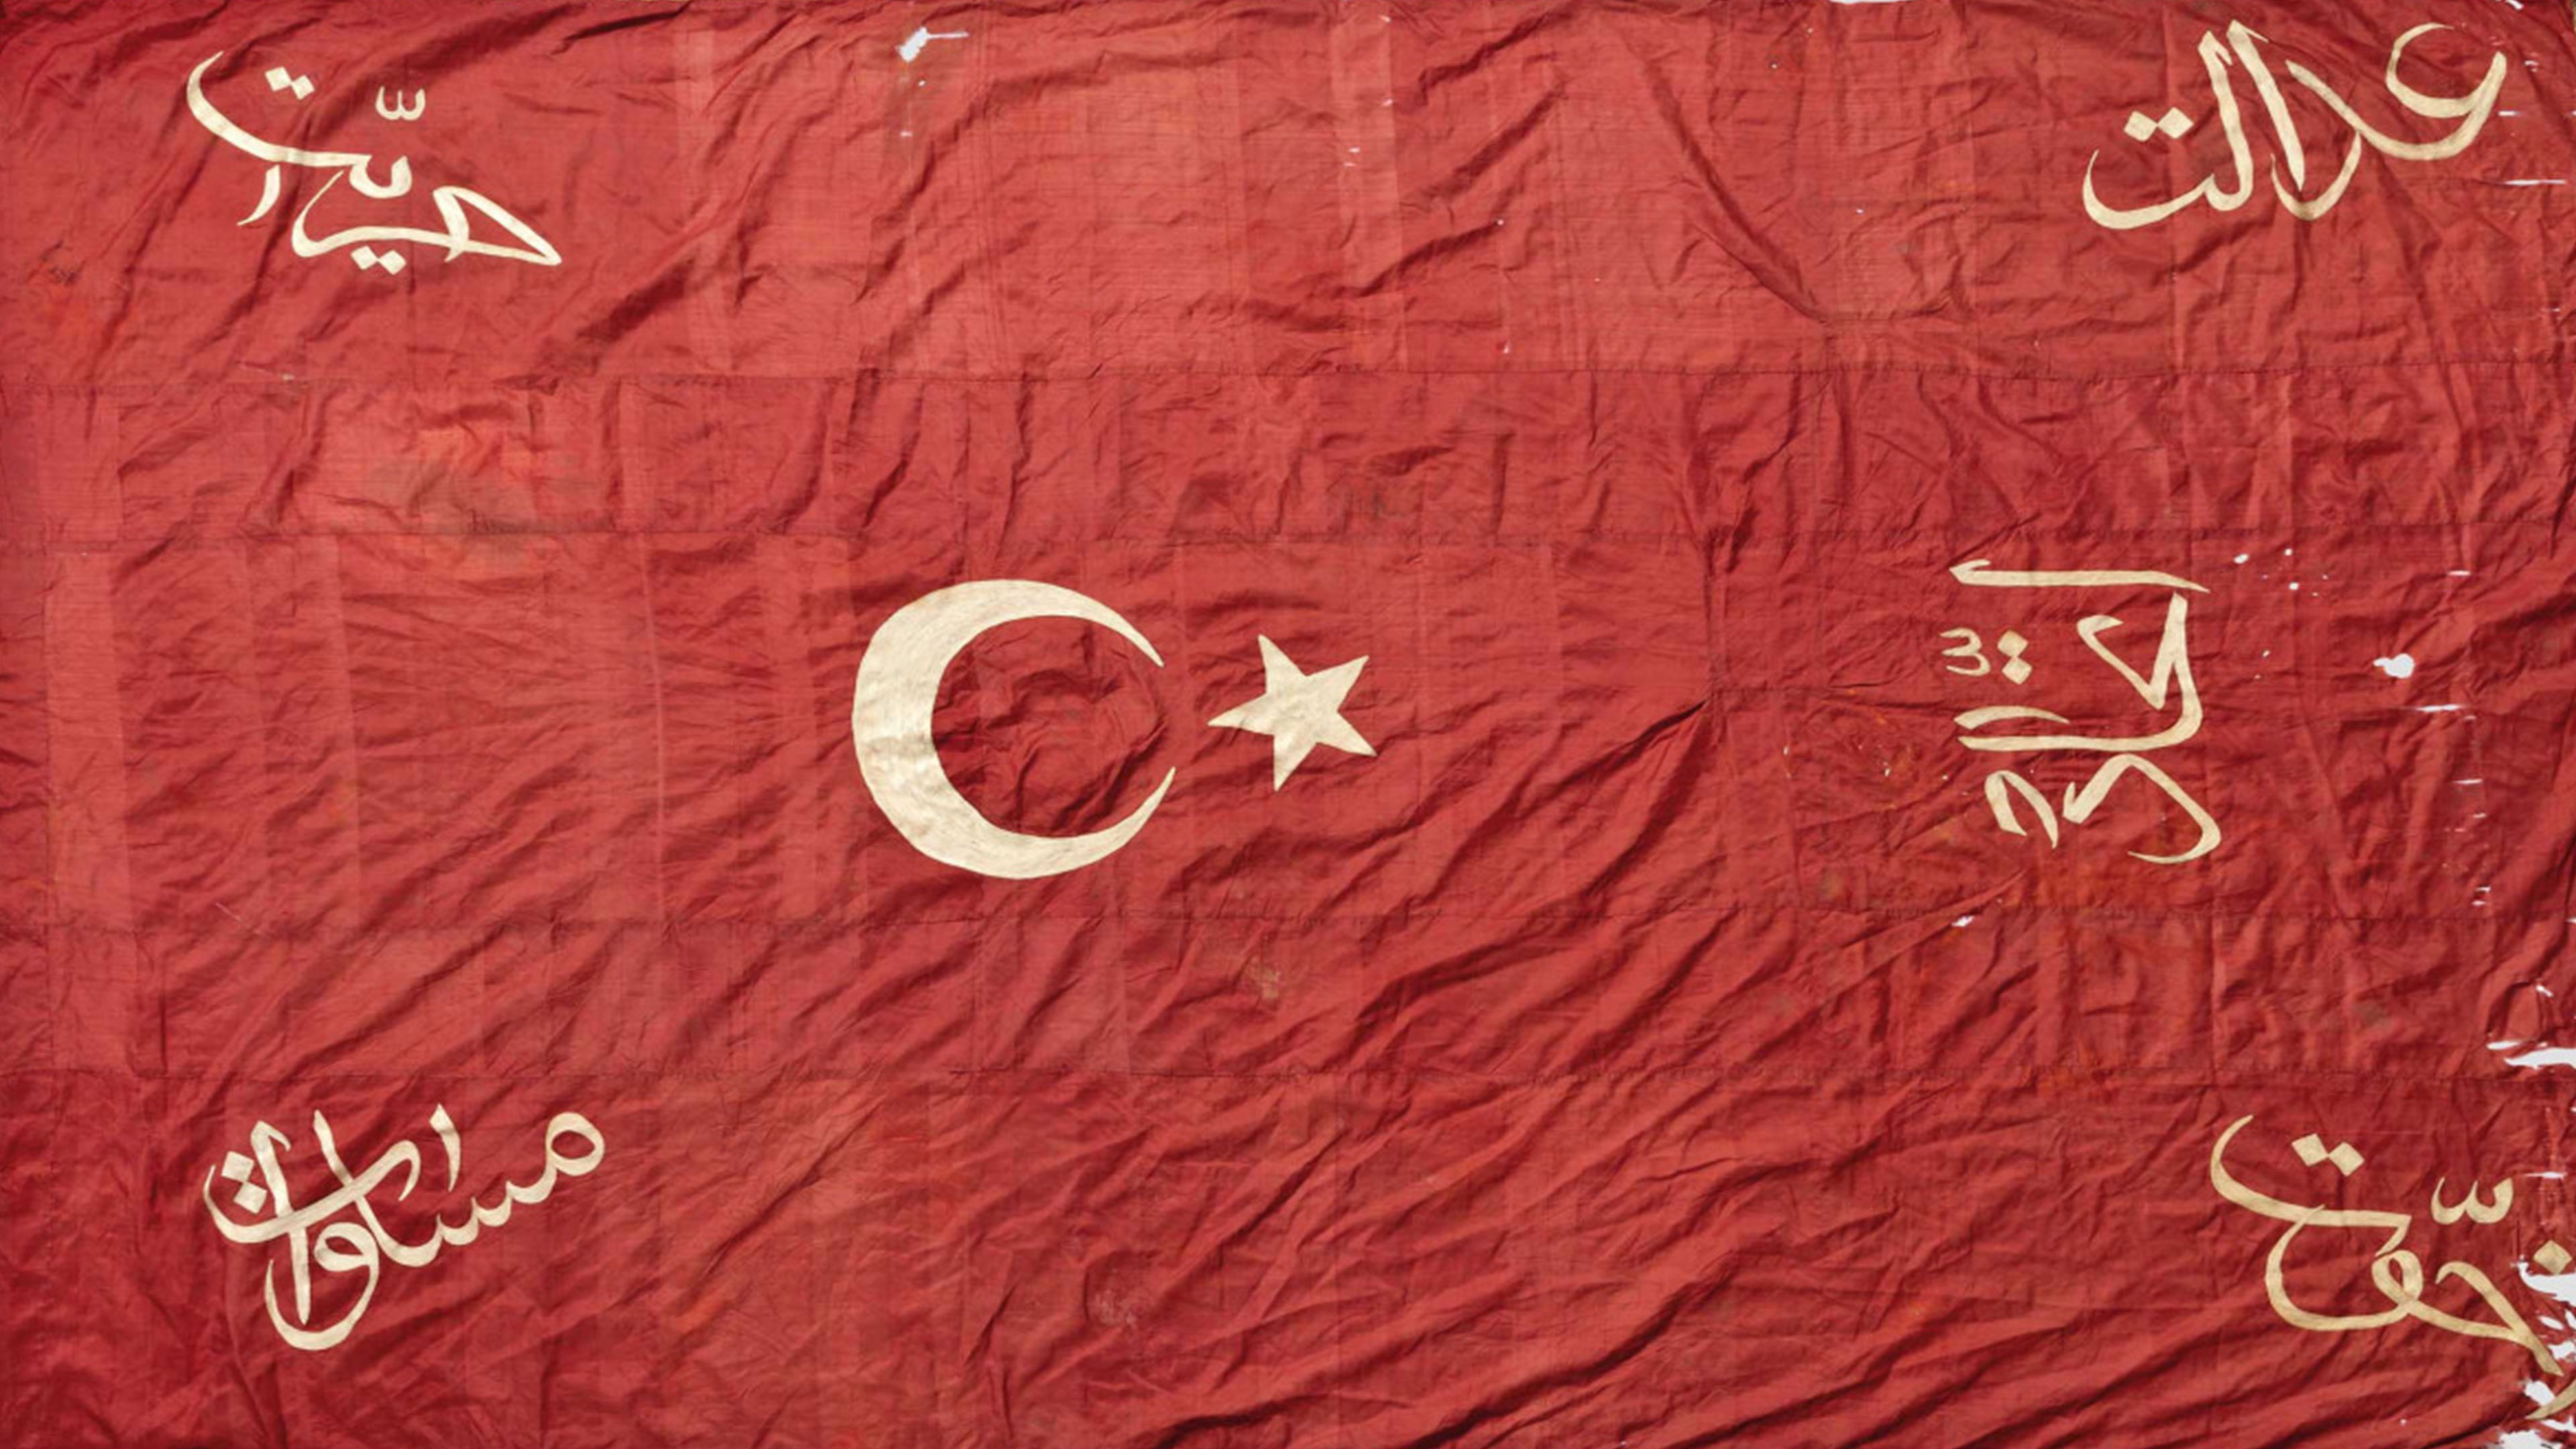 türk bayrağı wallpaper 4k,red,maroon,font,textile,logo